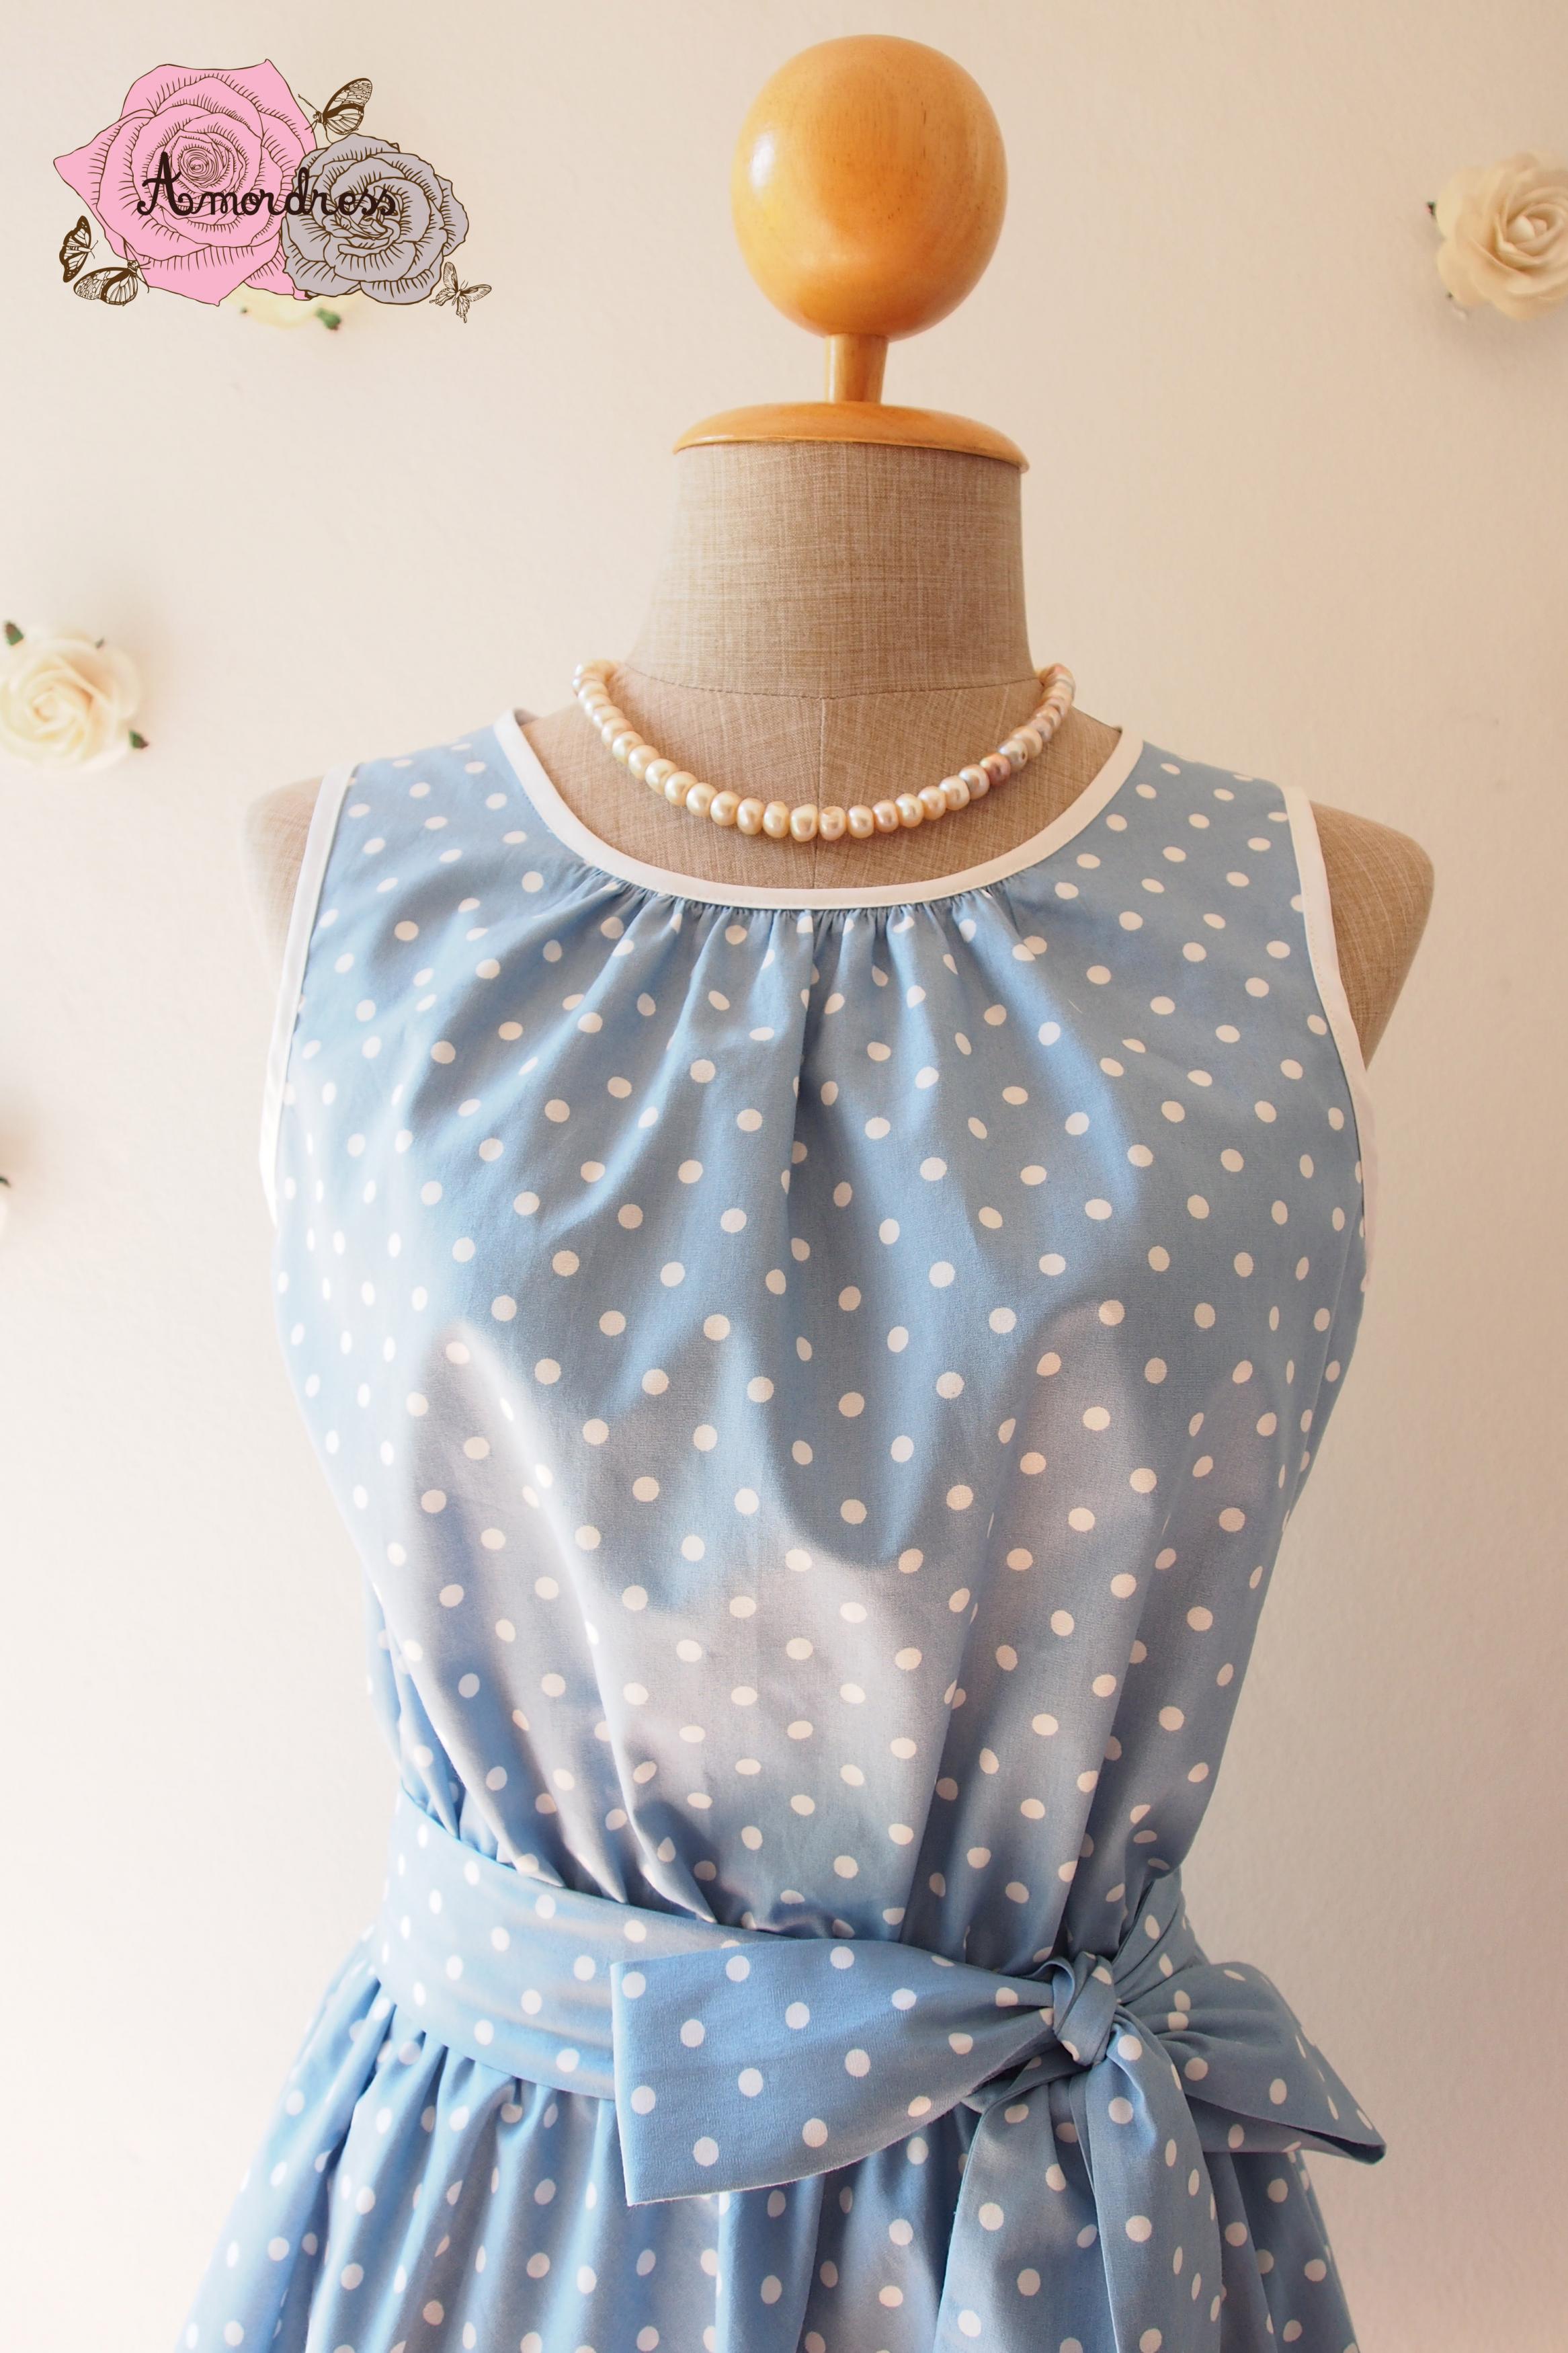 Baby Blue Dress Polka Dot Swing Dress Vintage Retro 50's Inspired Tea ...